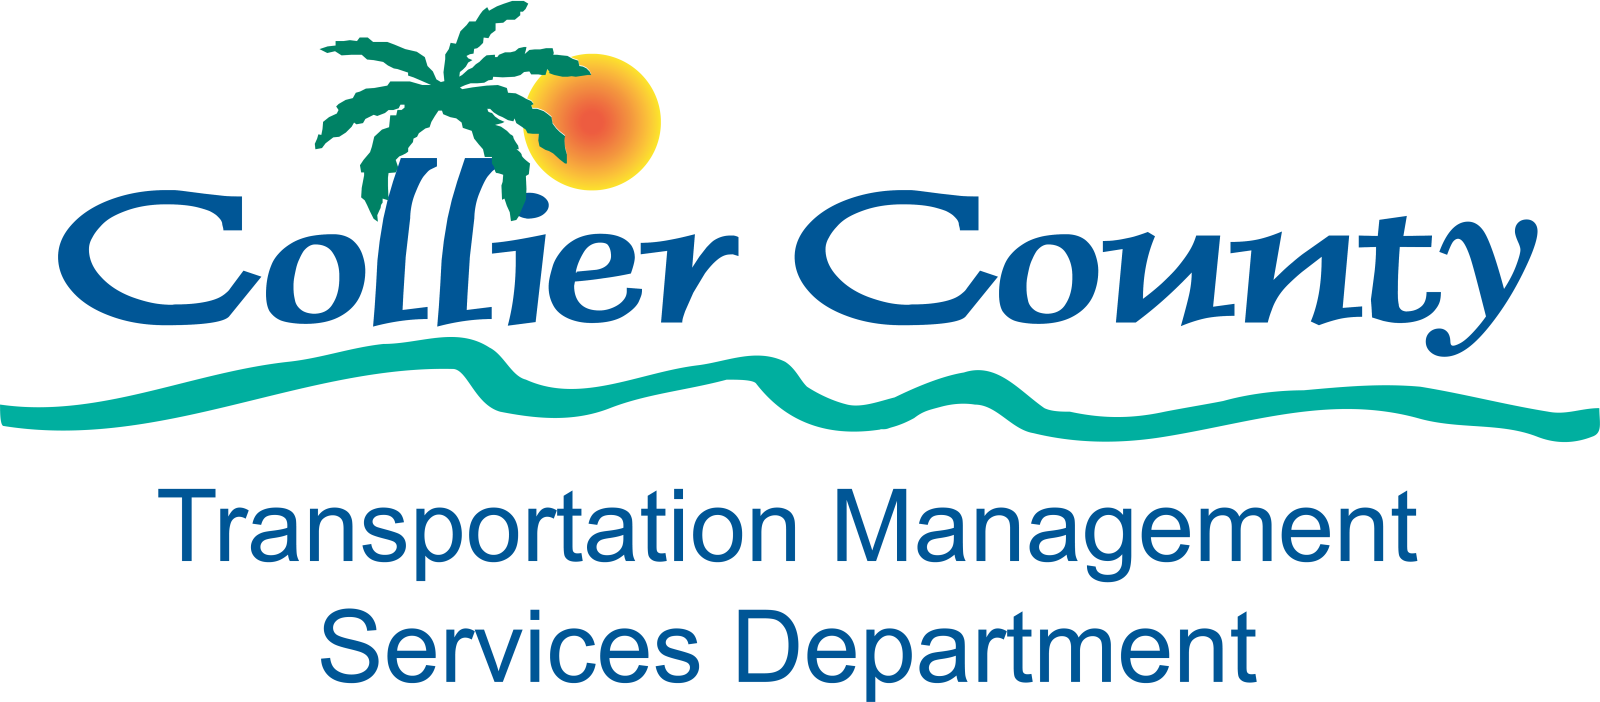 Transportation Management Services Department logo